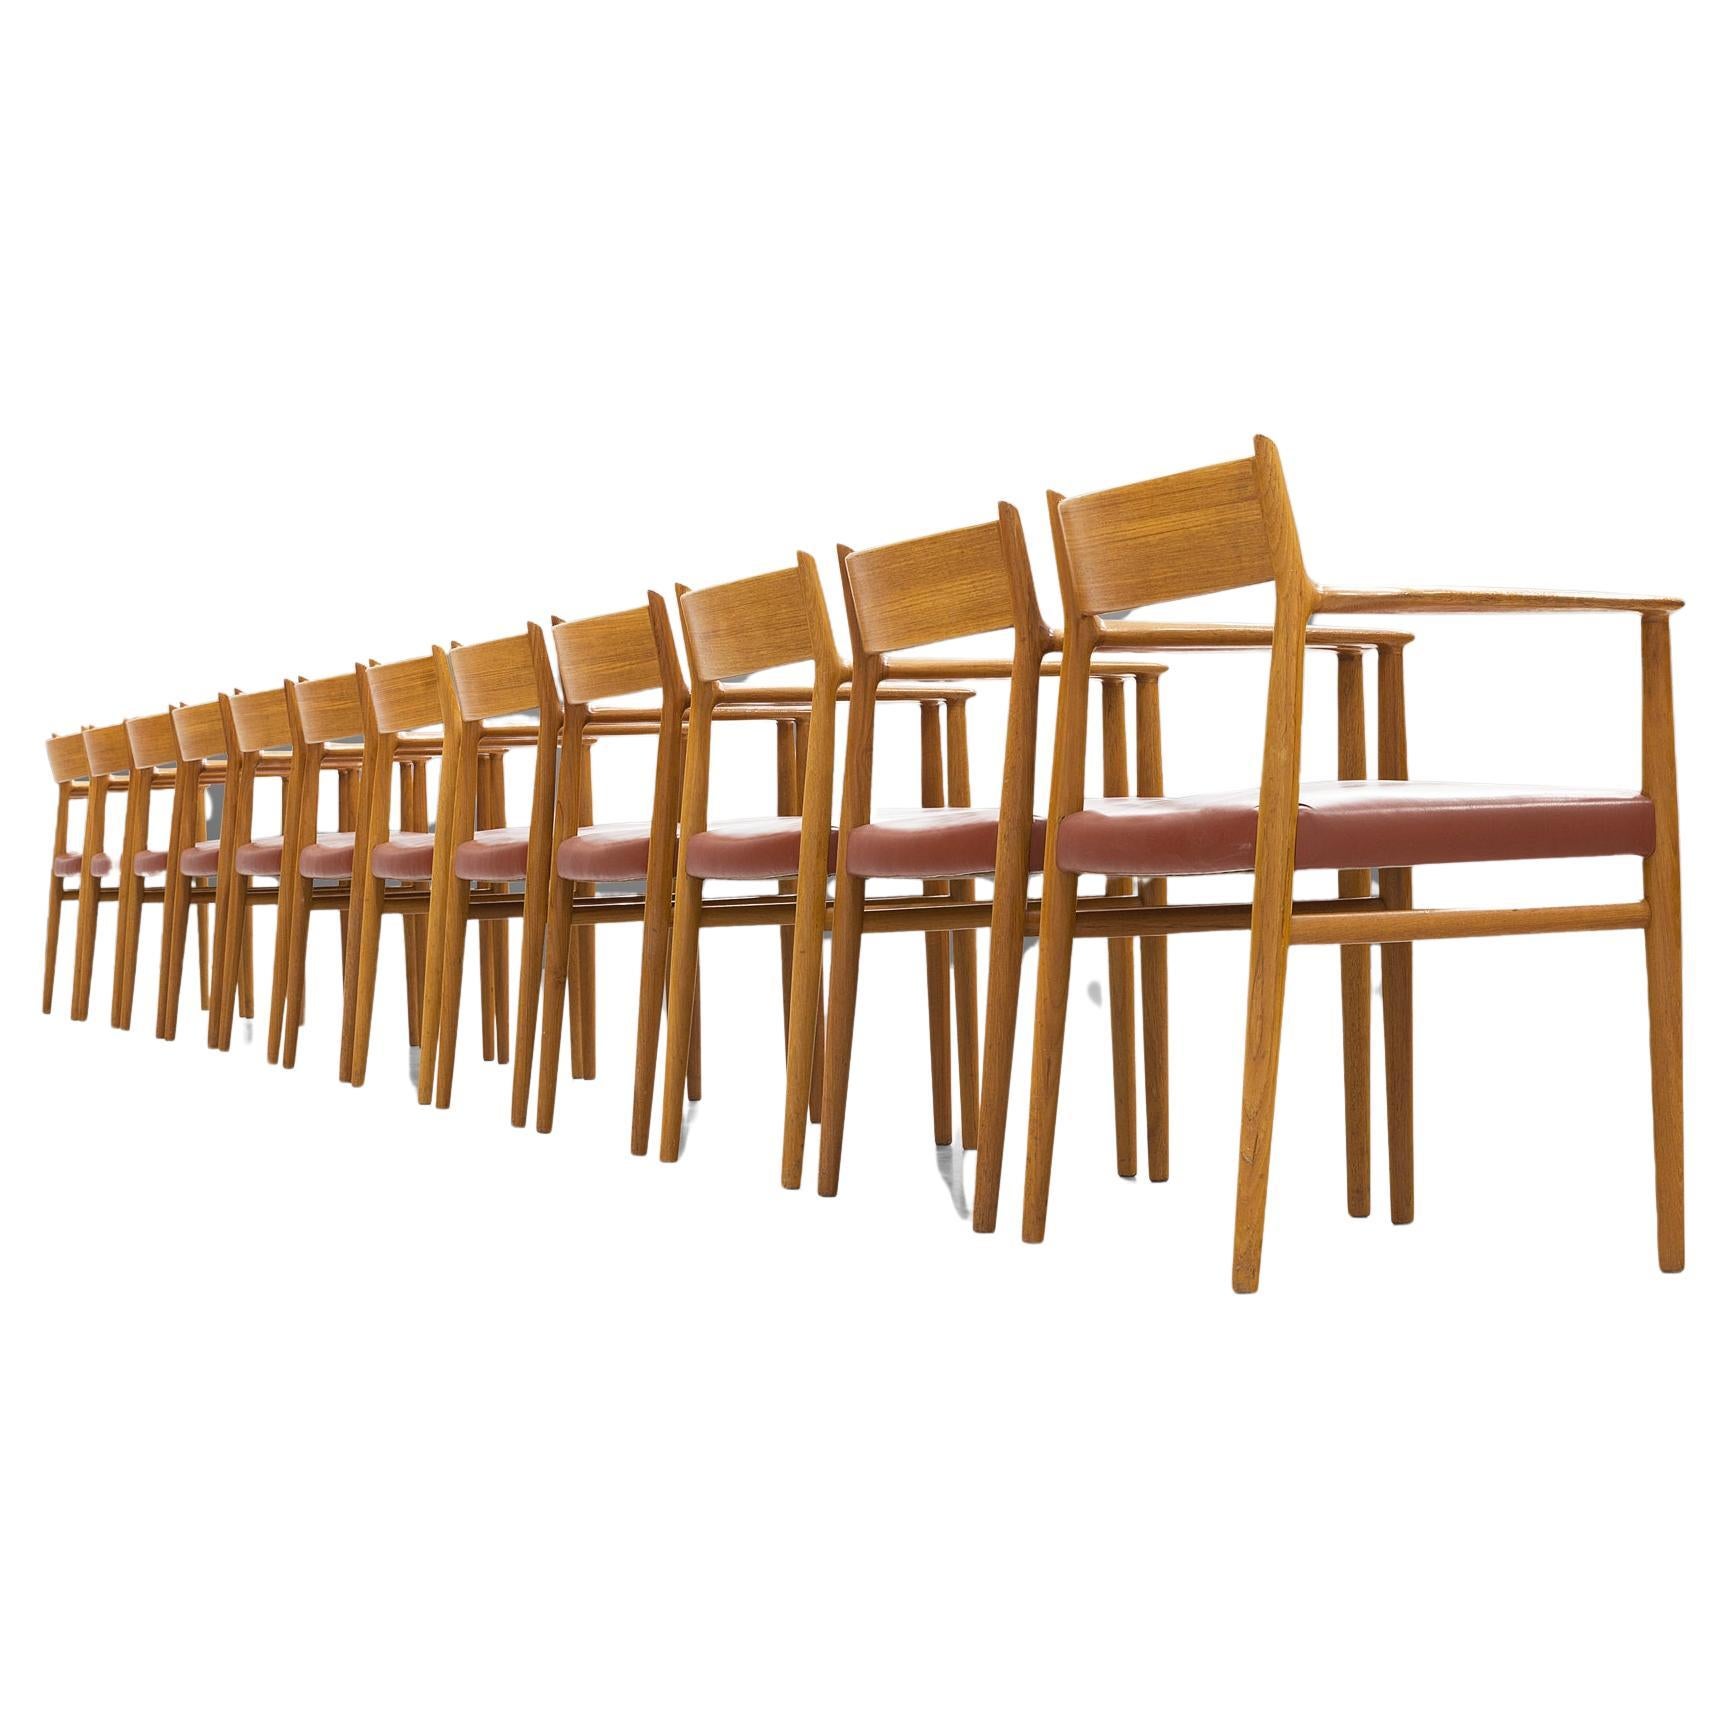 Special Listing For Kavi - 8 x Arne Vodder Chairs restored + Sculptural Table 